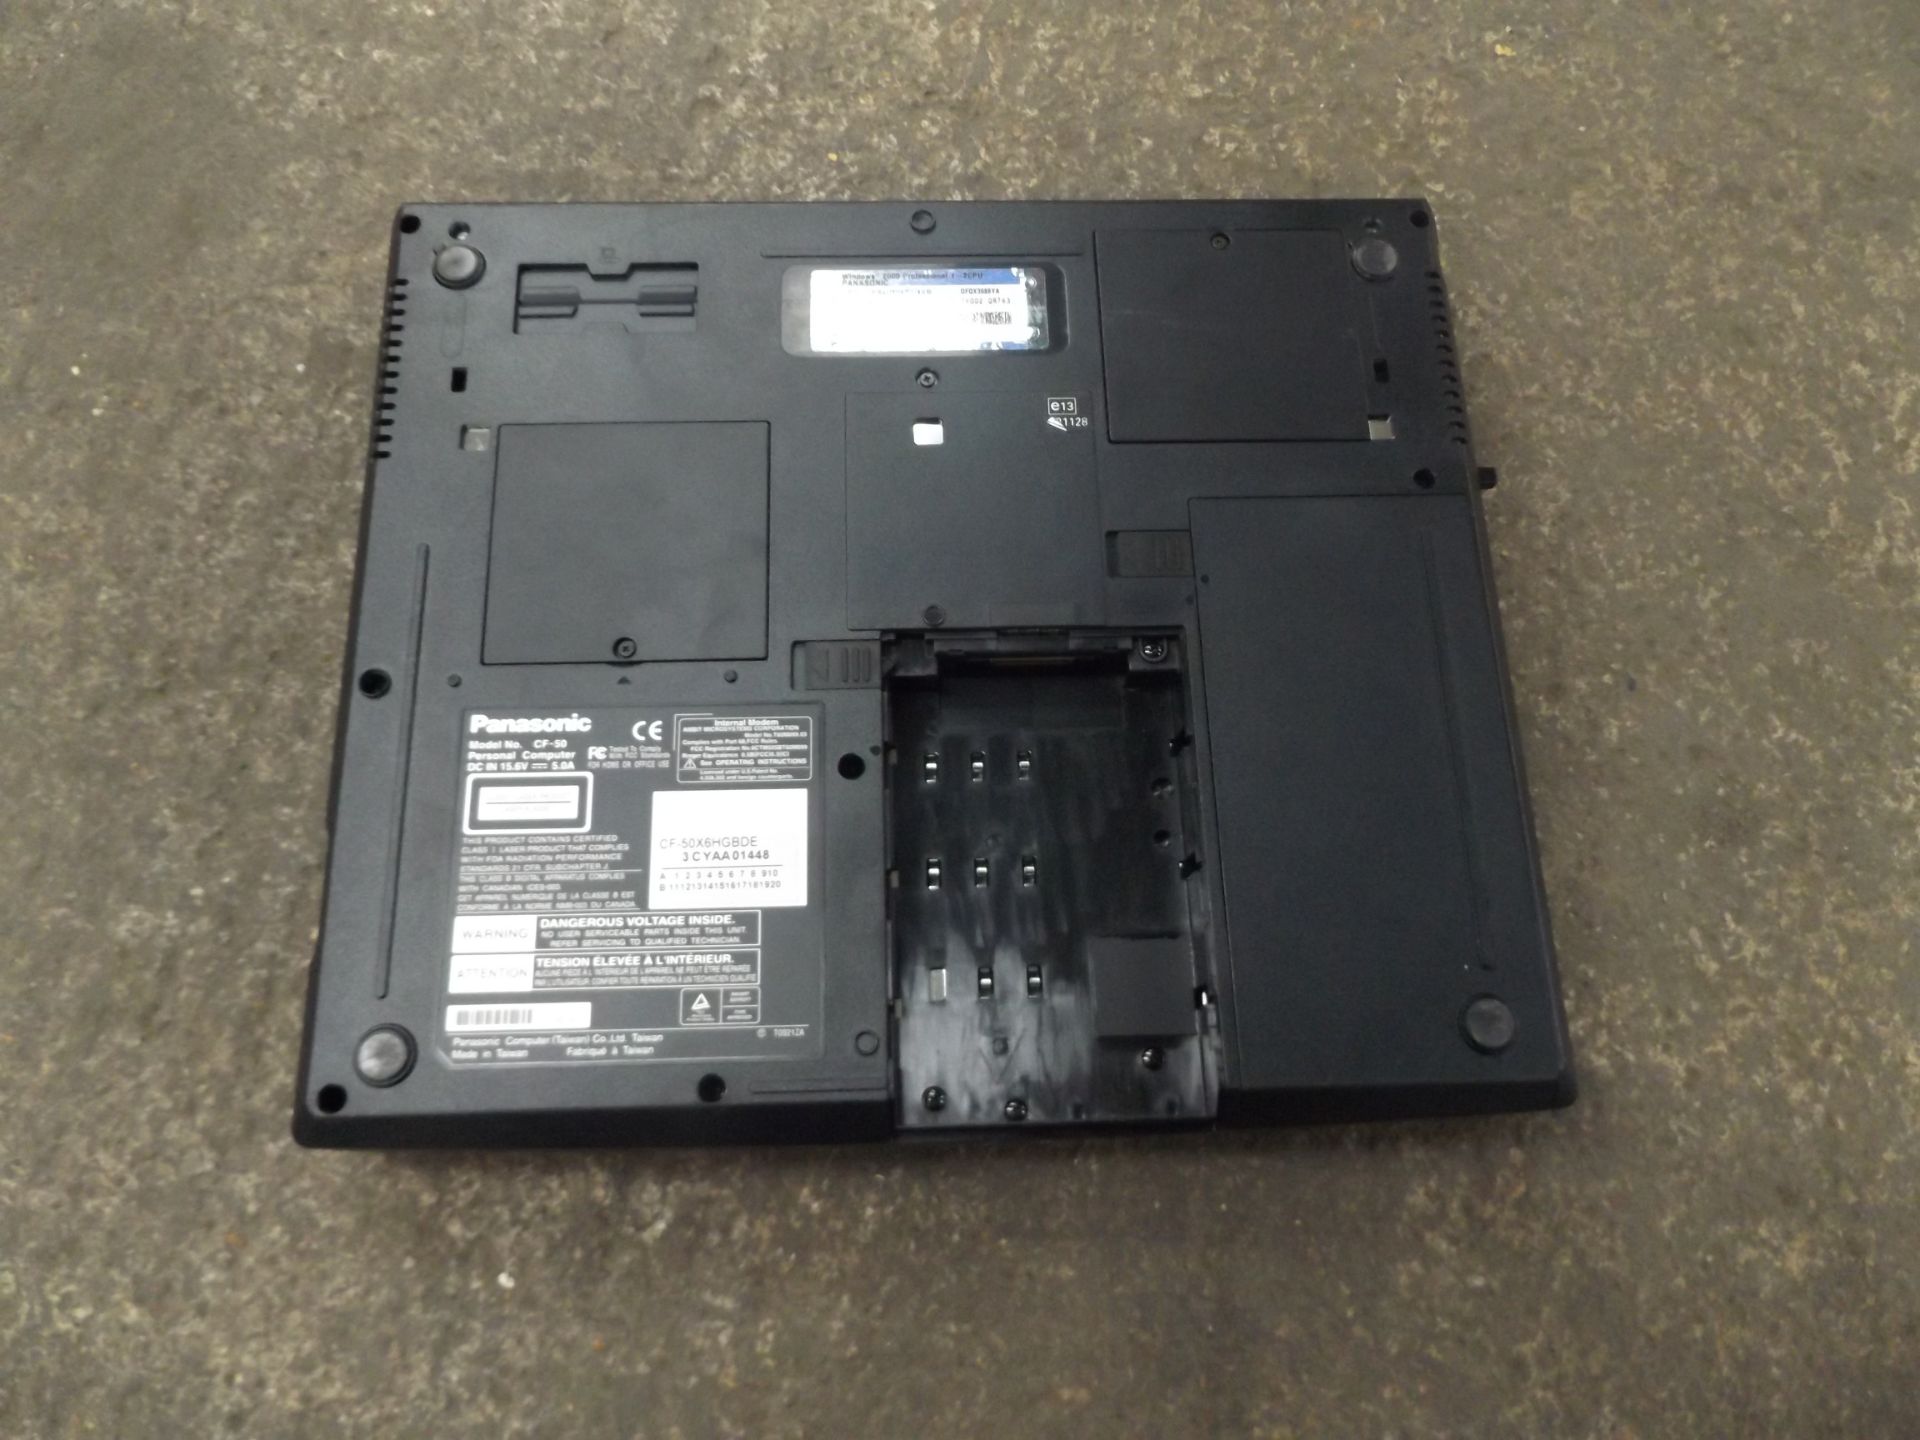 5 x Panasonic CF-50 Toughbook Laptops - Image 9 of 10